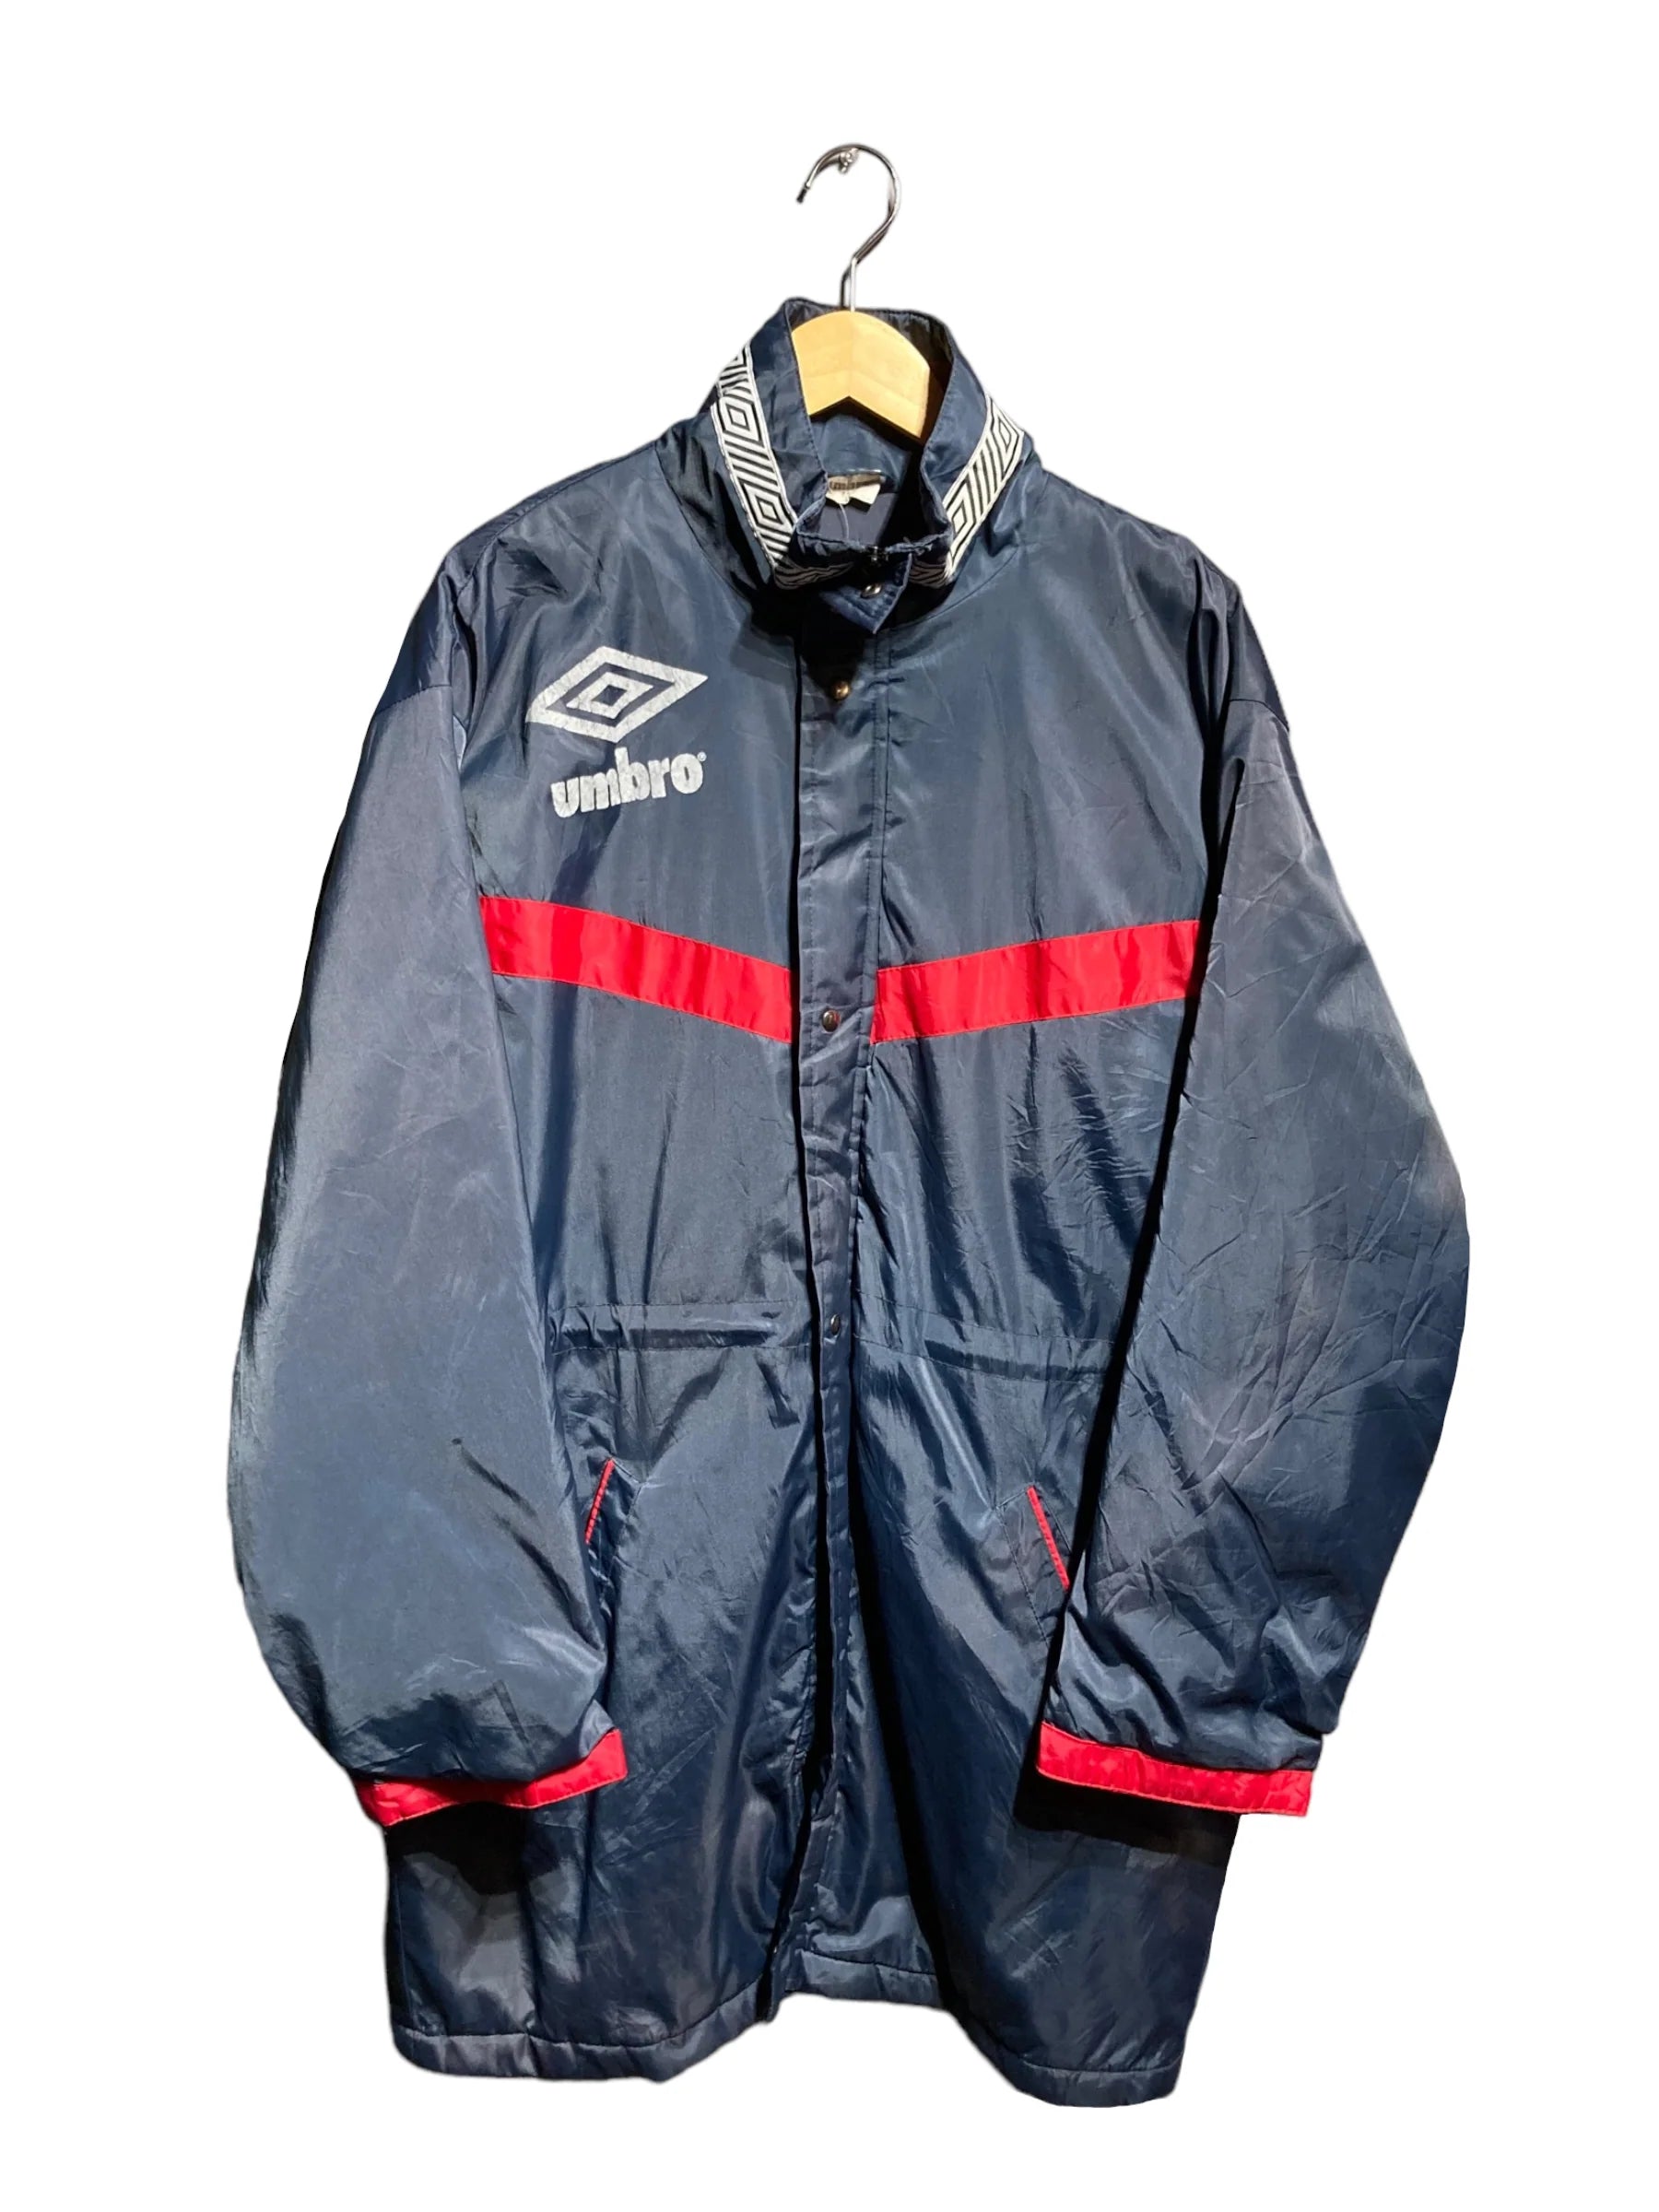 80-90s アンブロ ビンテージ レインジャケット ナイロンジャケット商品の状態寸法などは画像参照